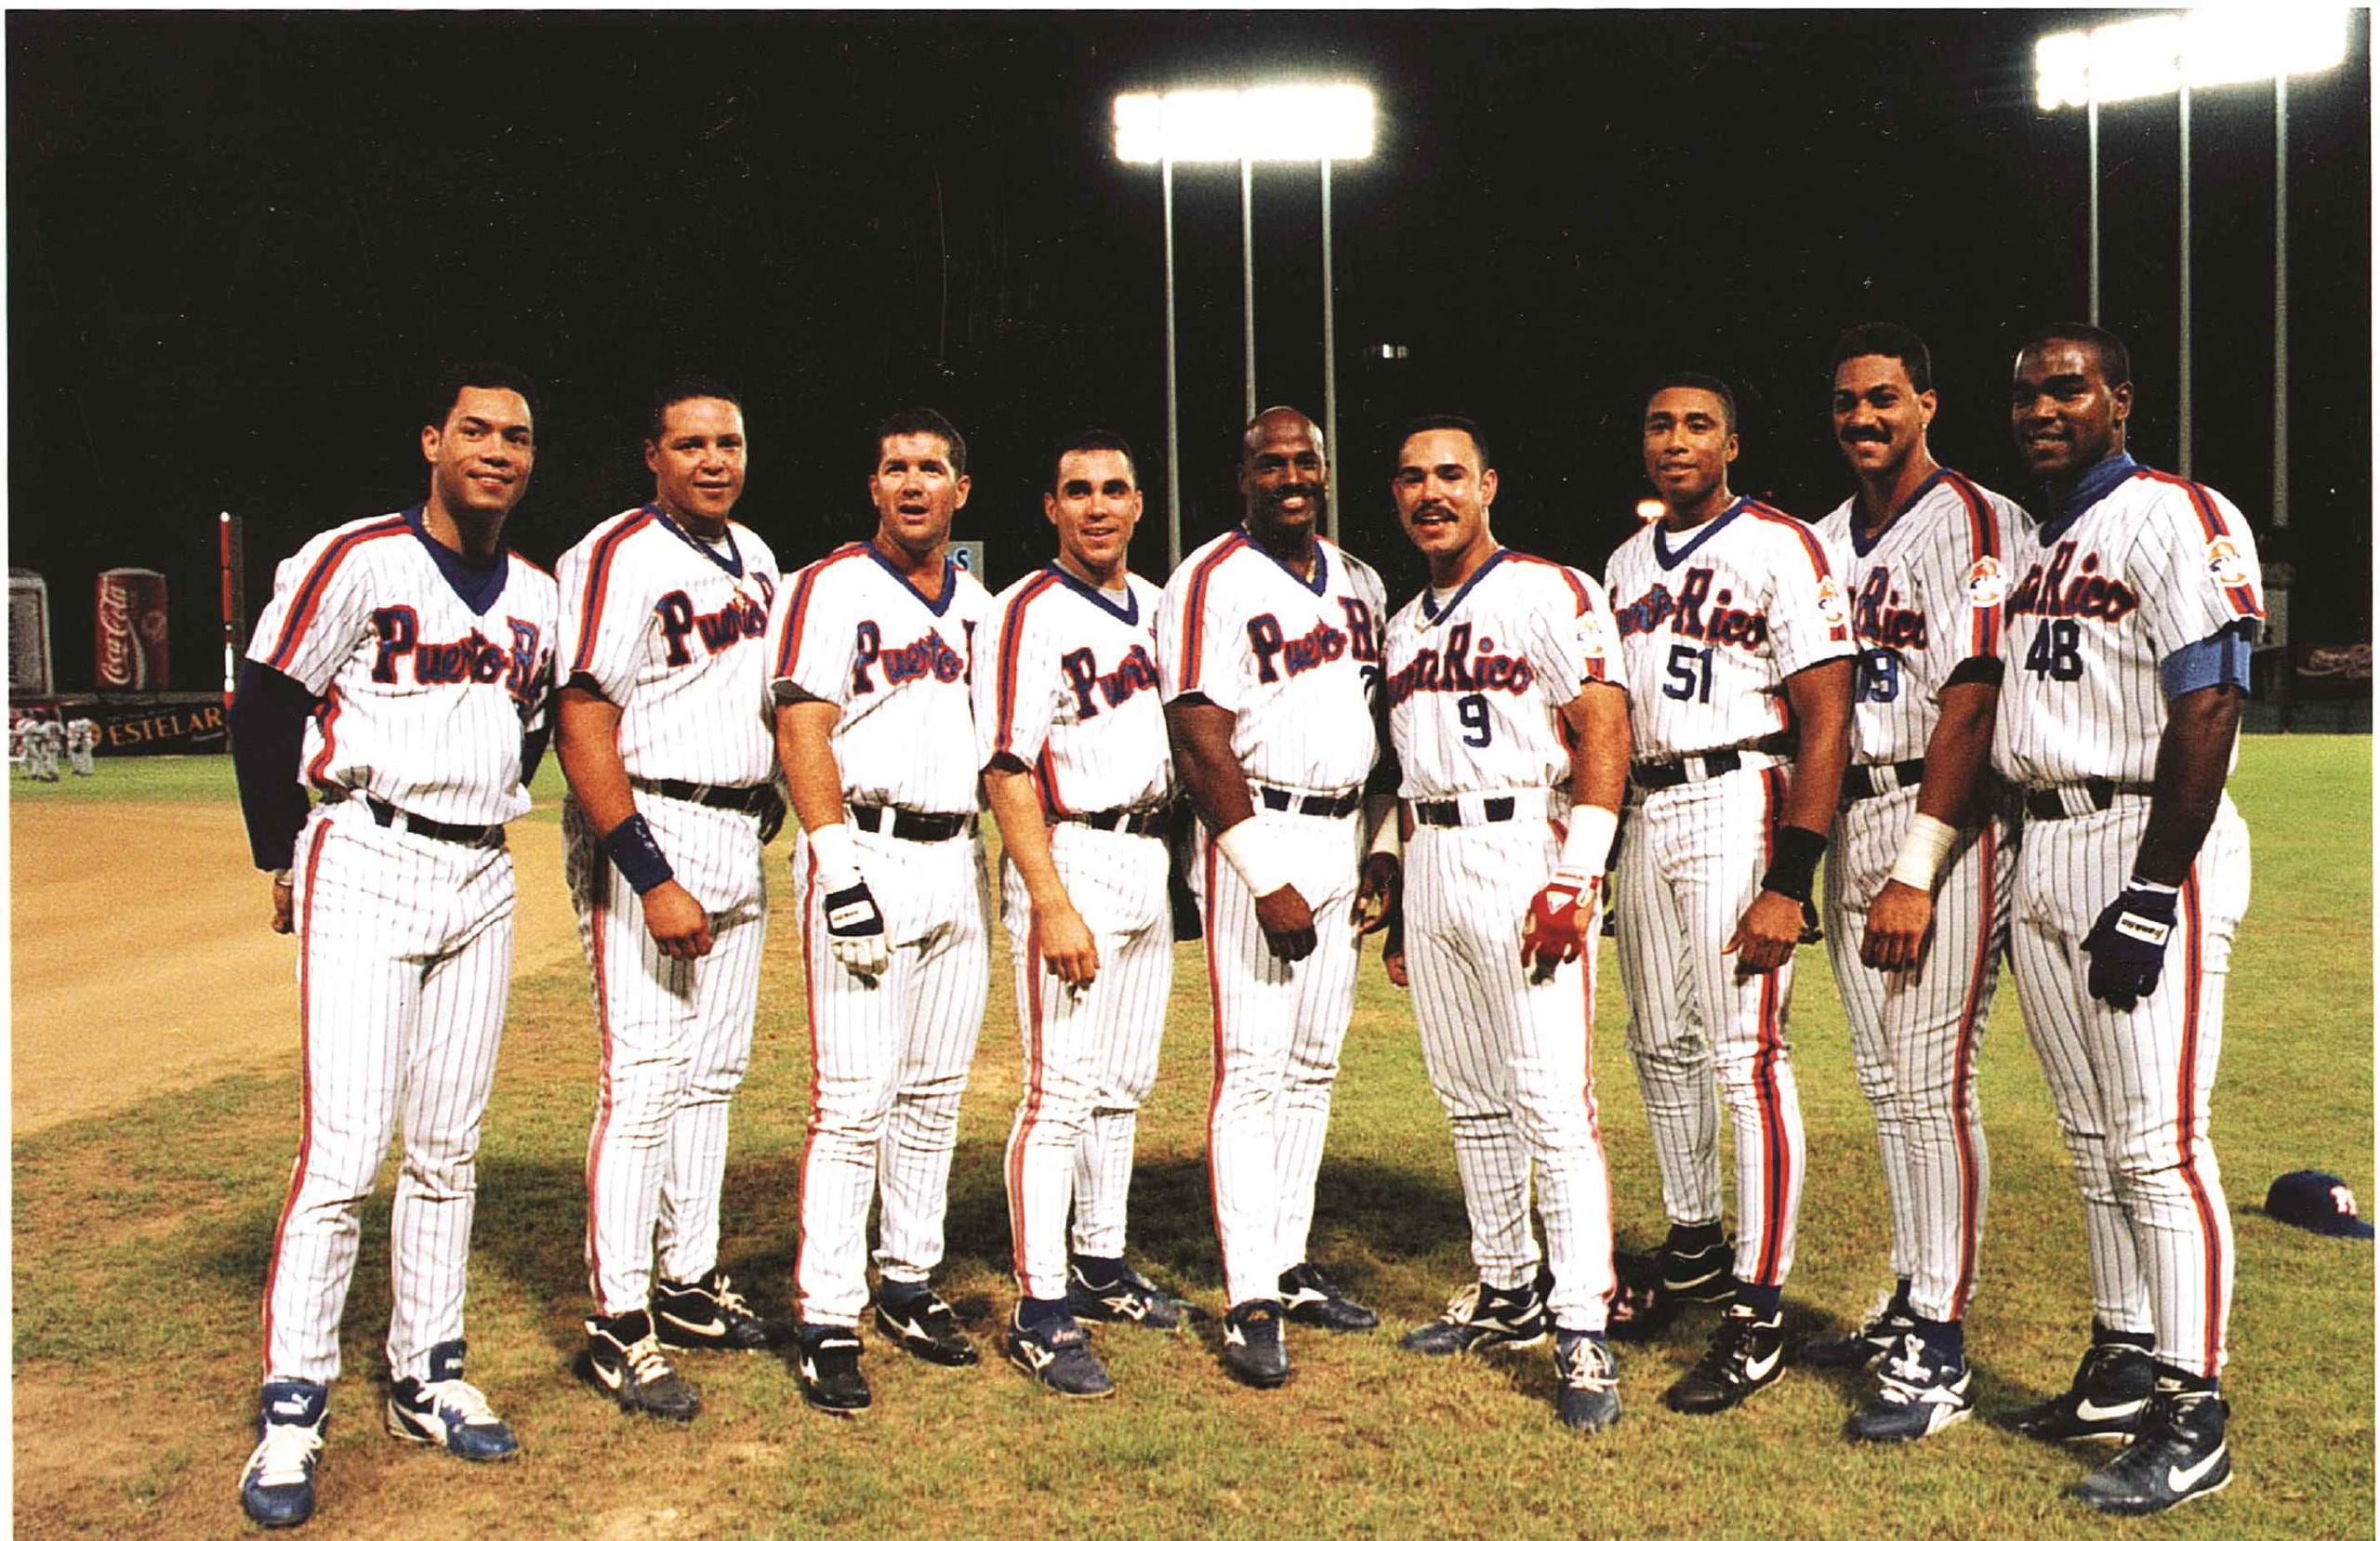 1995 | Los integrantes del "Dream Team" boricua que conquistó la Serie del Caribe de béisbol, llevada a cabo en el estadio Hiram Bithorn, de manera invicta. (José Rodríguez)